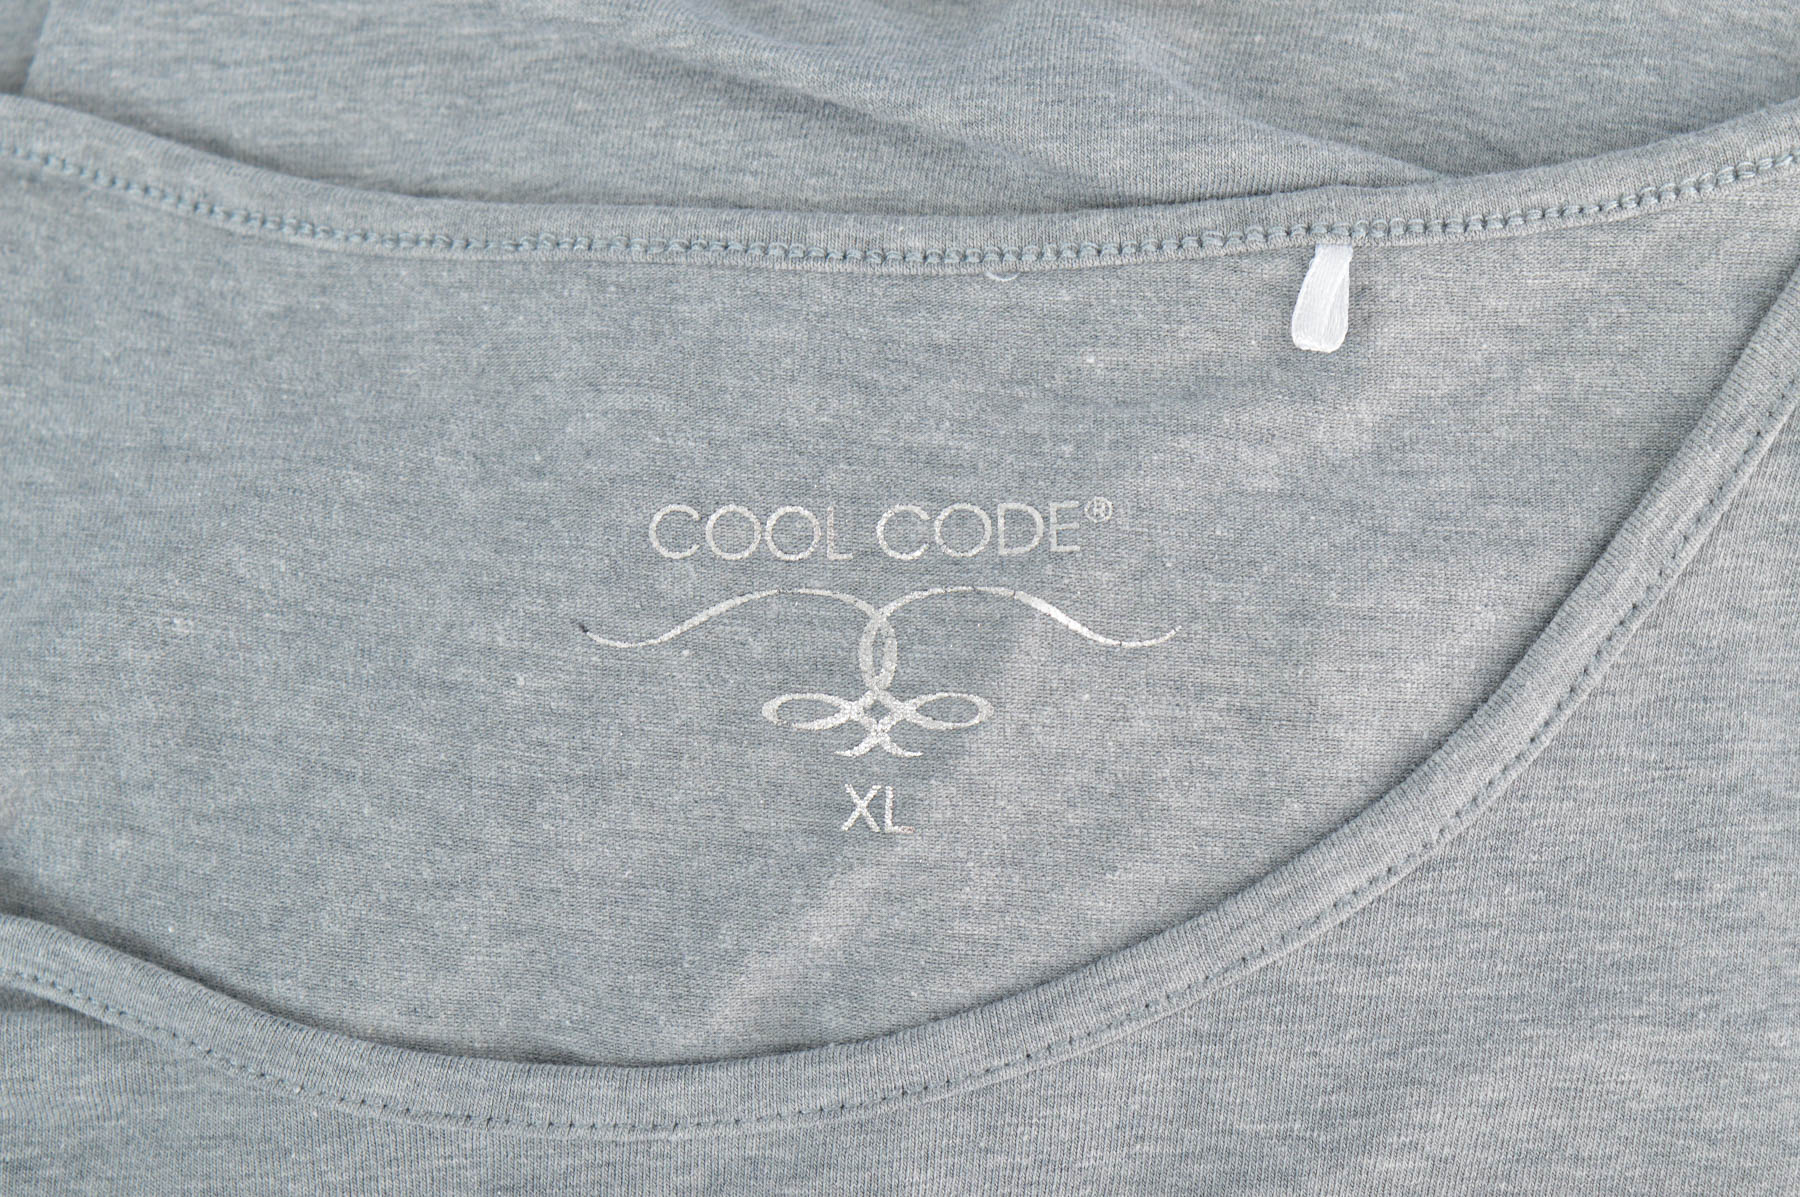 Damski podkoszulek - COOL CODE - 2